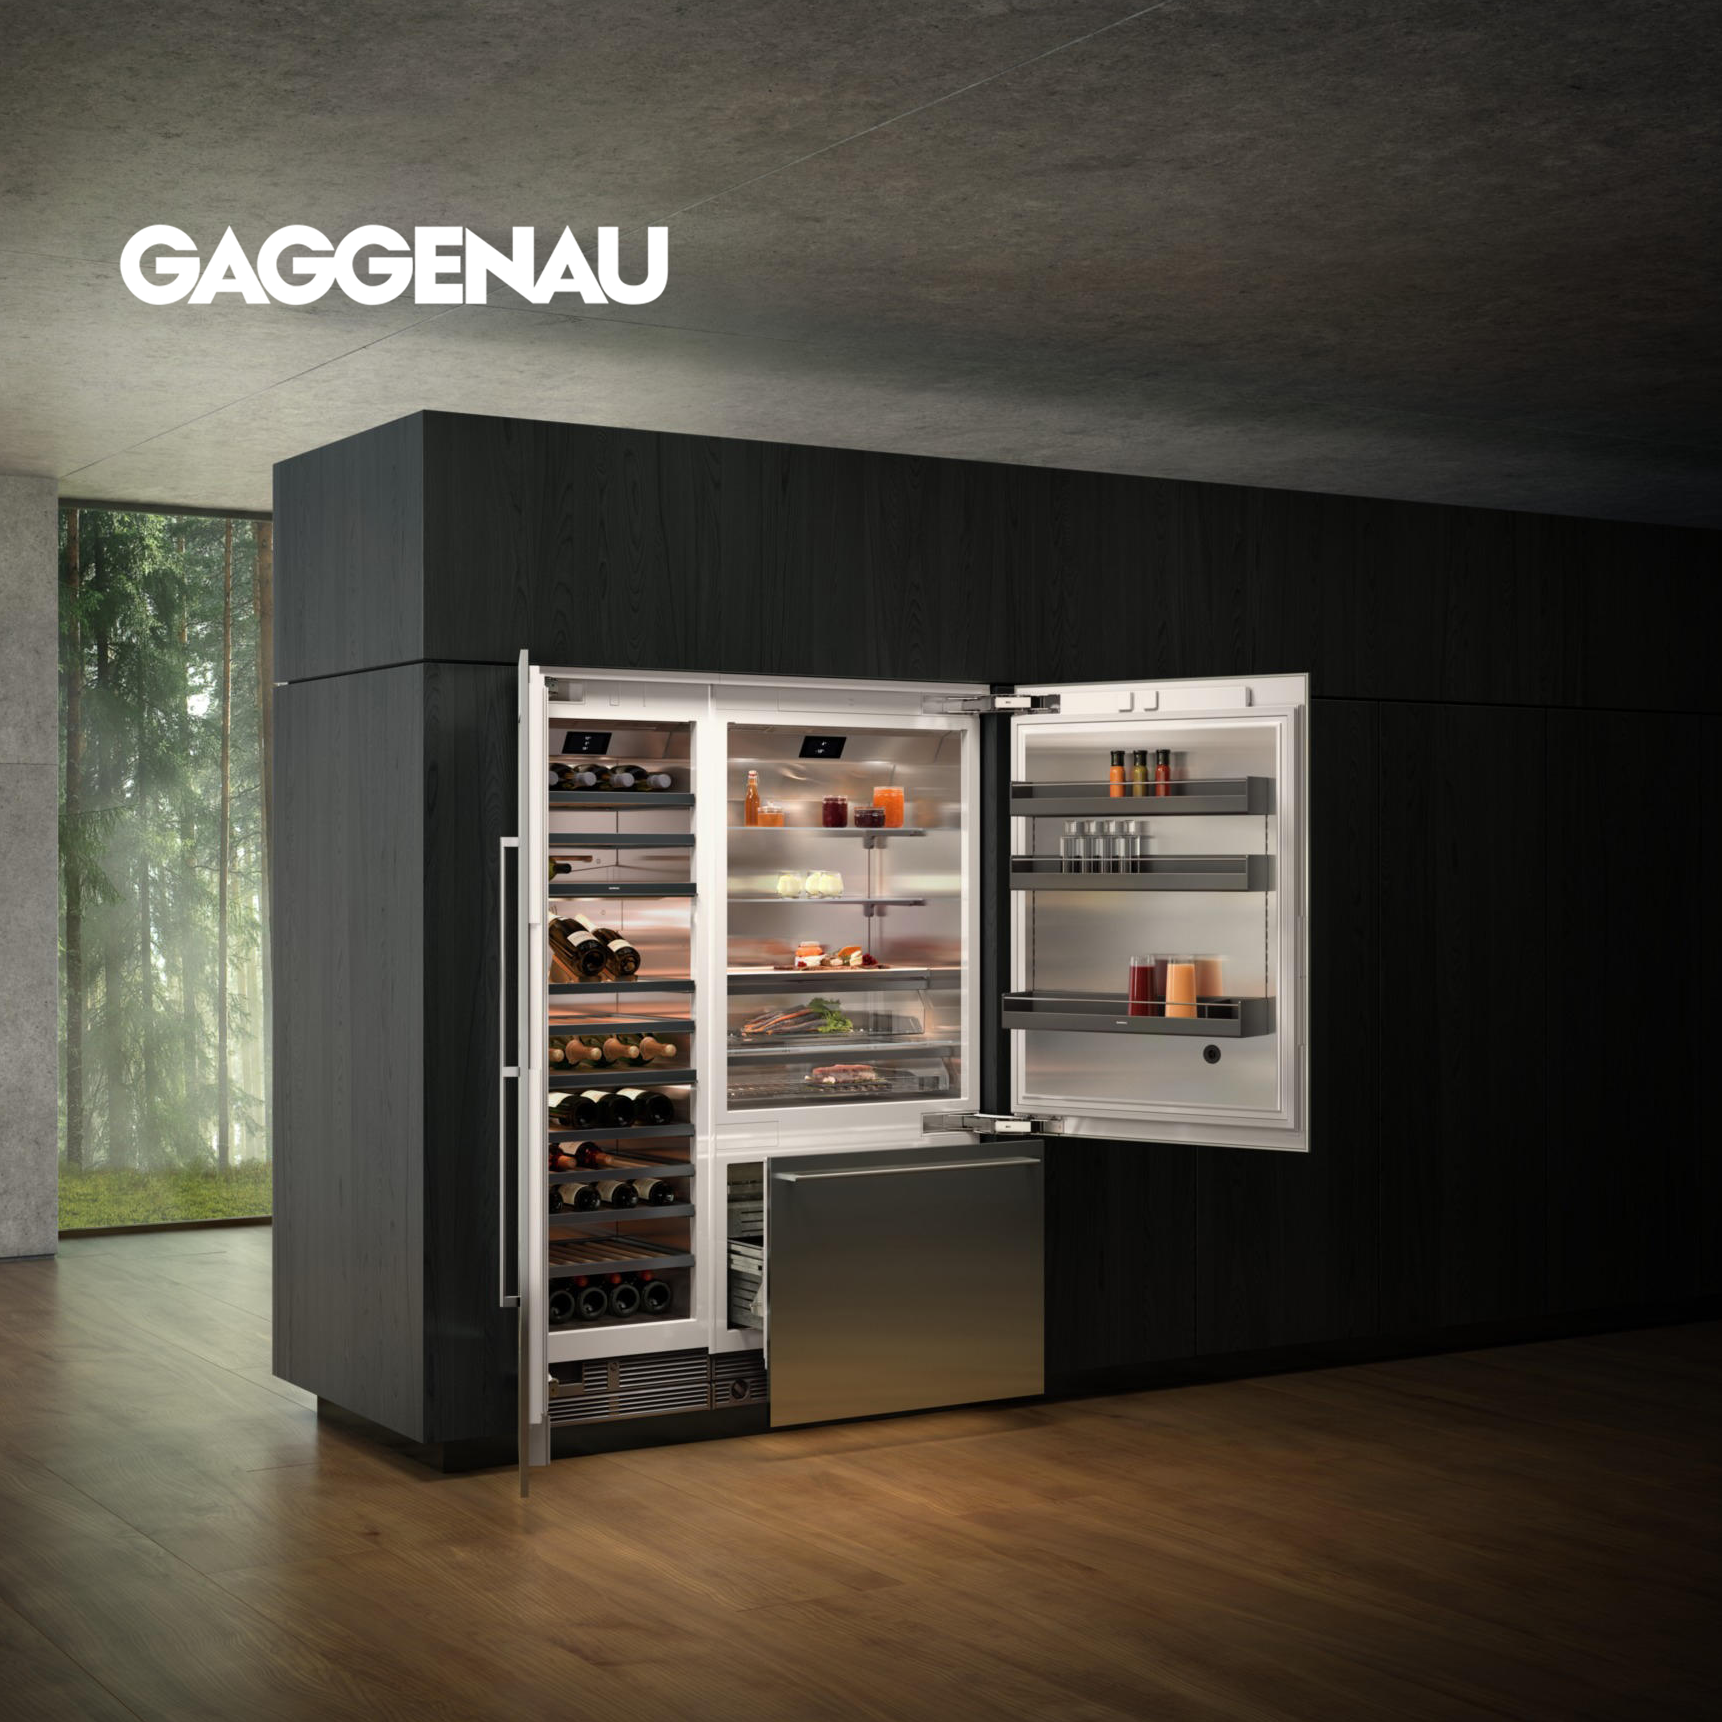 GAGGENAU – Luxusné kuchynské spotrebiče